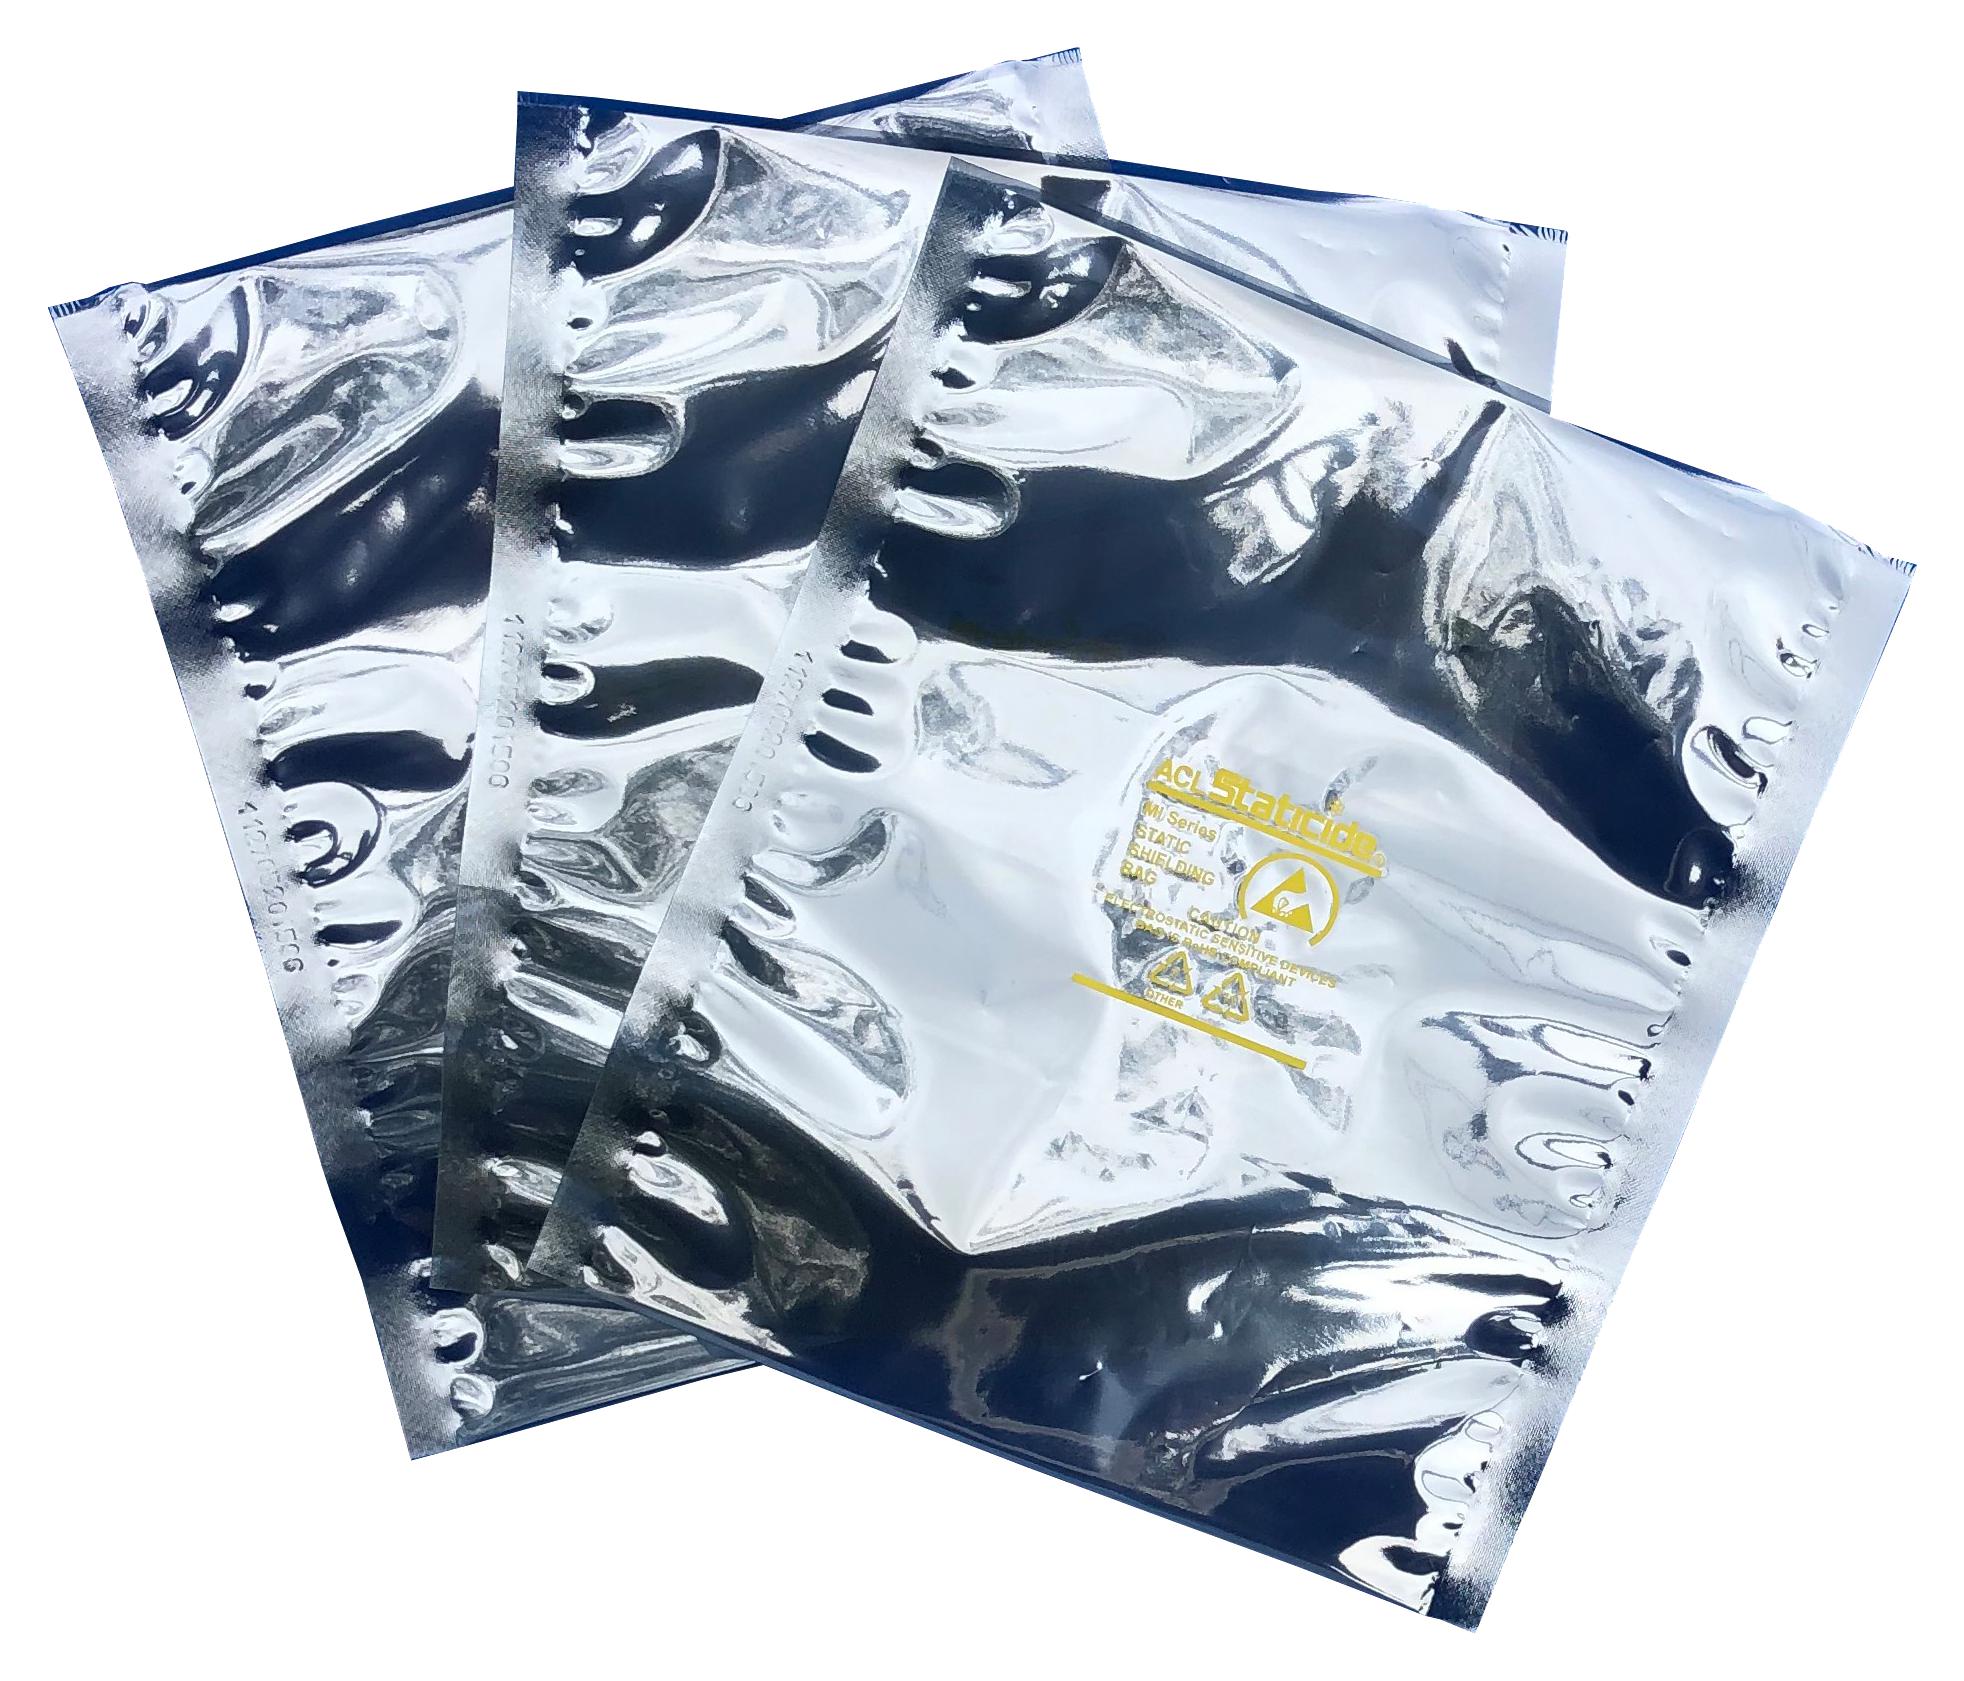 Acl Staticide Mi68 Static Shielding Bag, Metal-In, 6 X 8